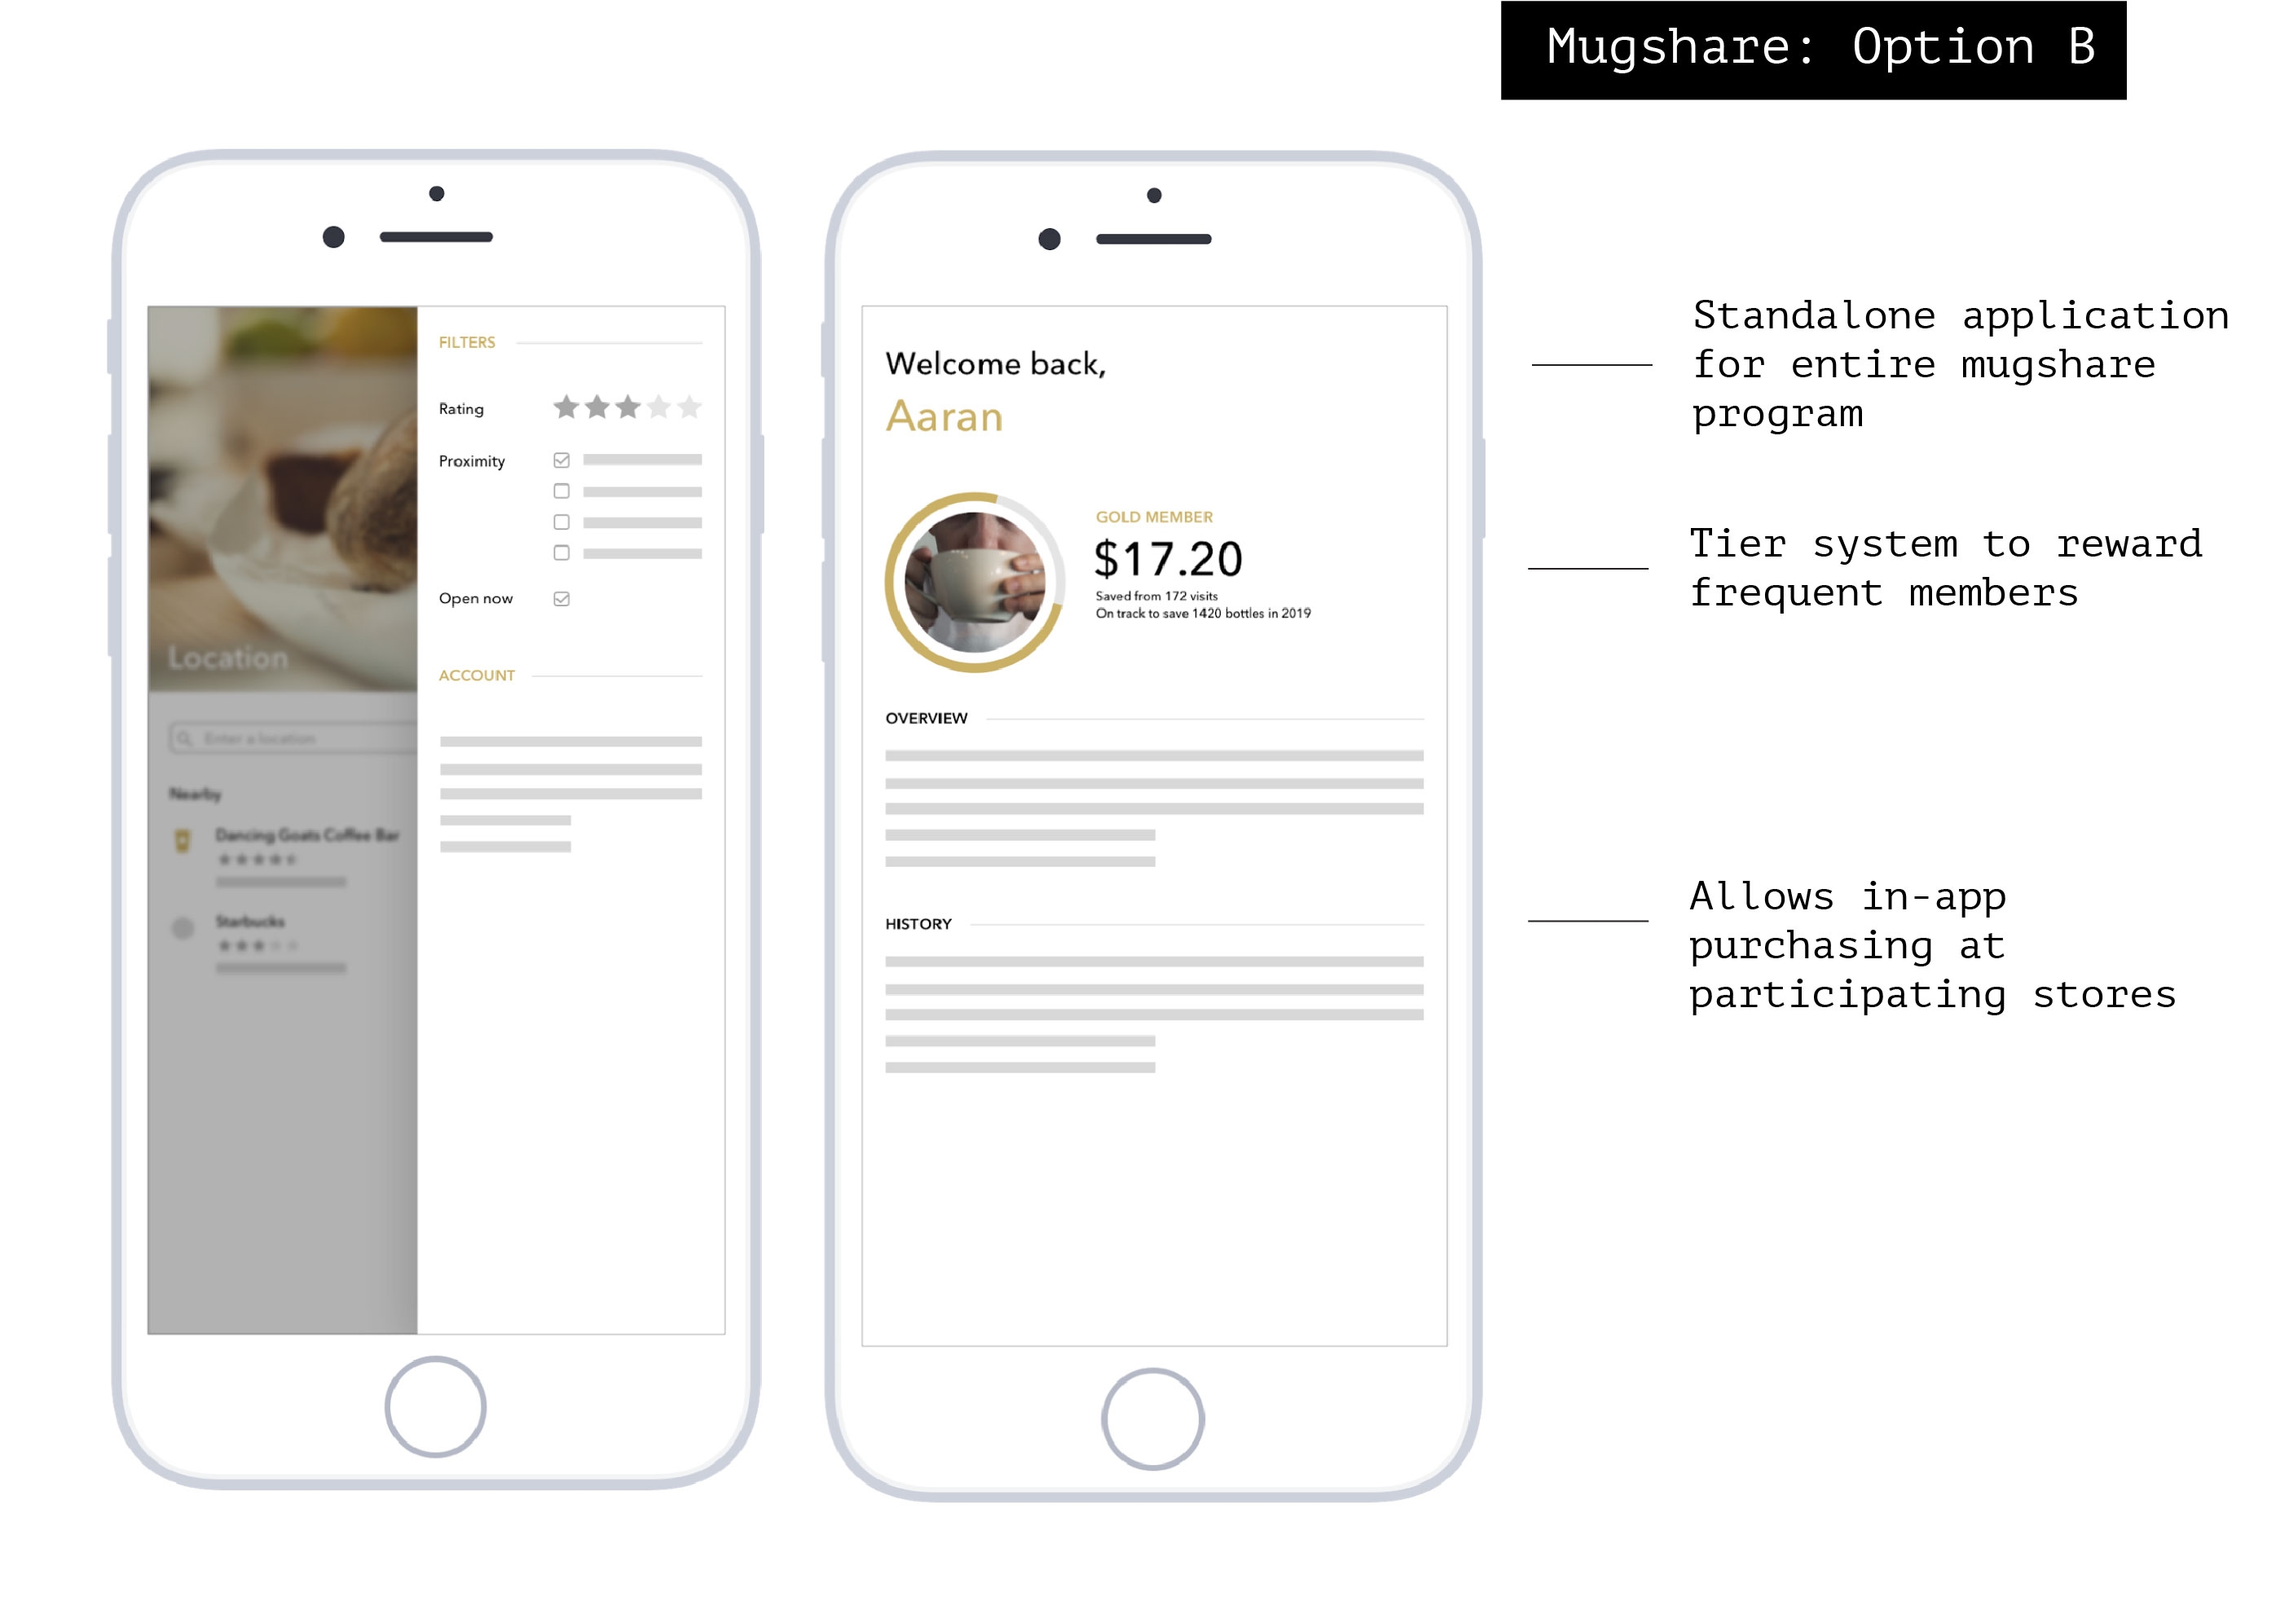 Mughsare option 2: a new standalone application for a complete mugshare program